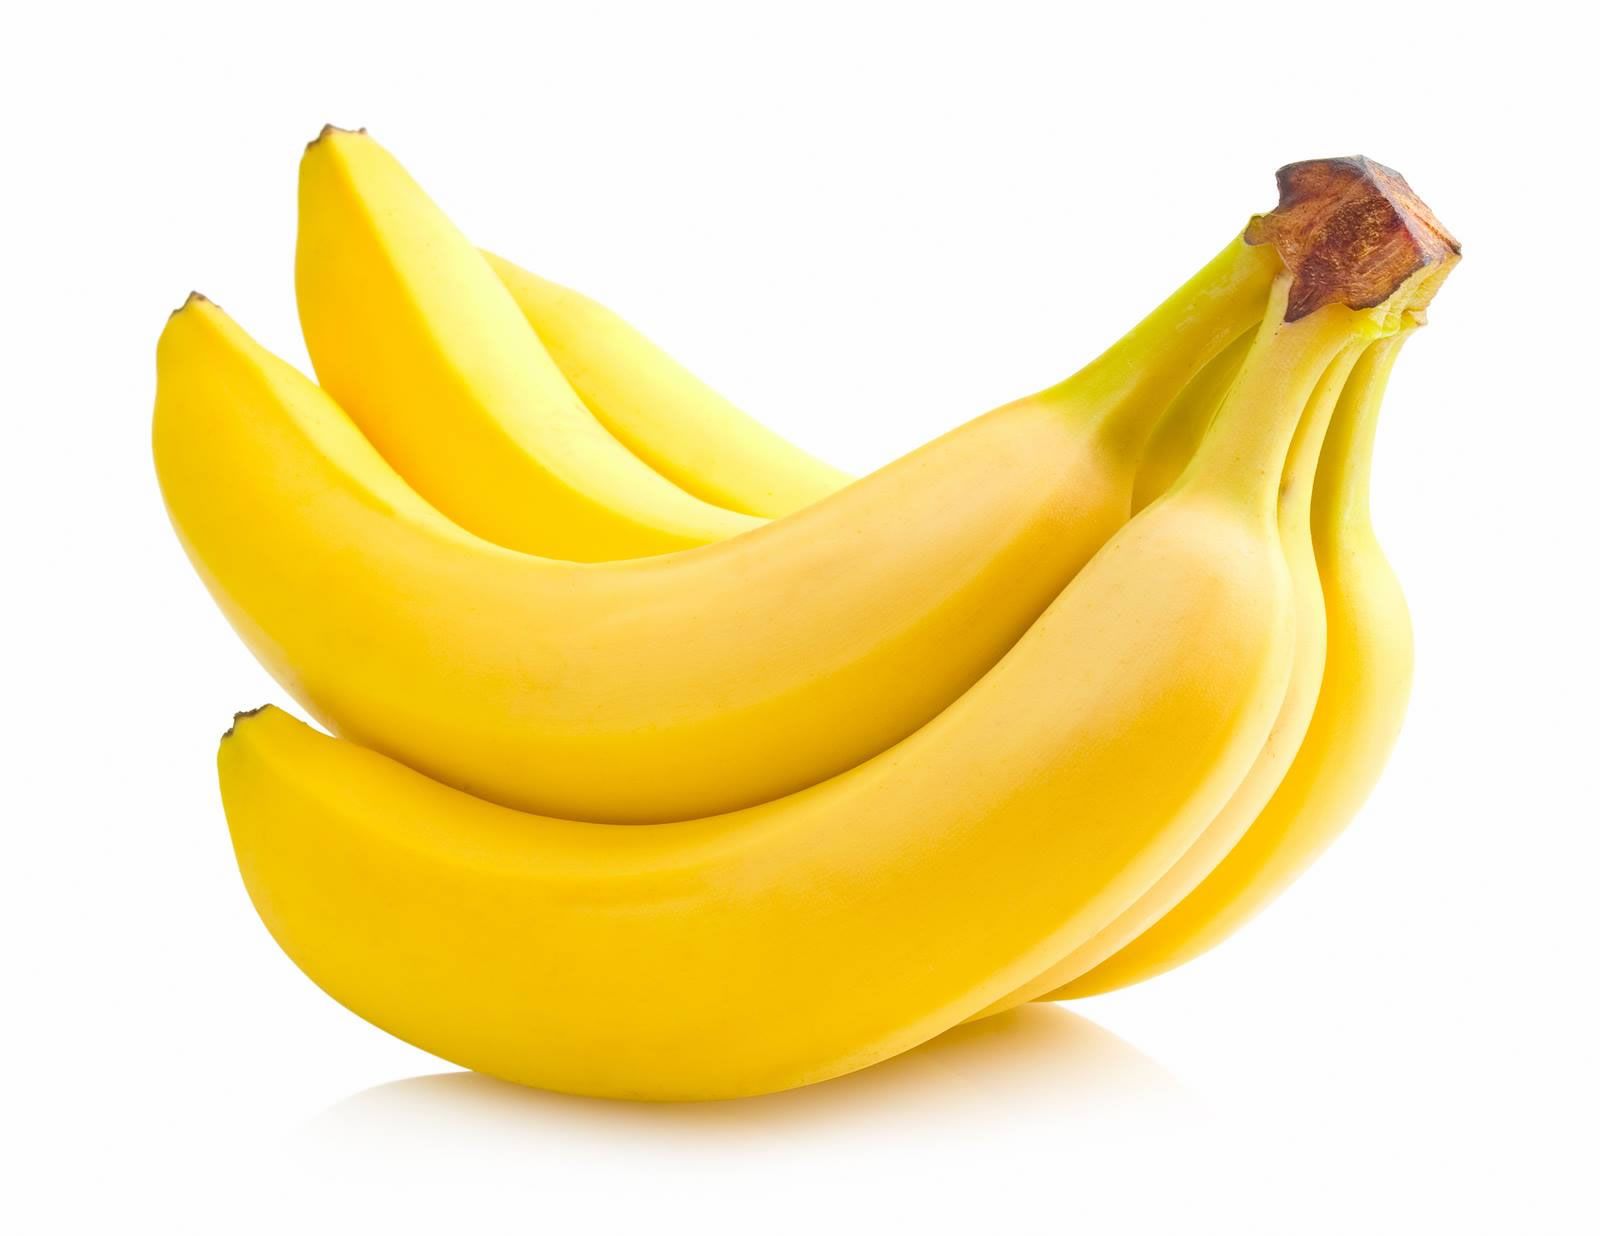 Картинки для детей банан